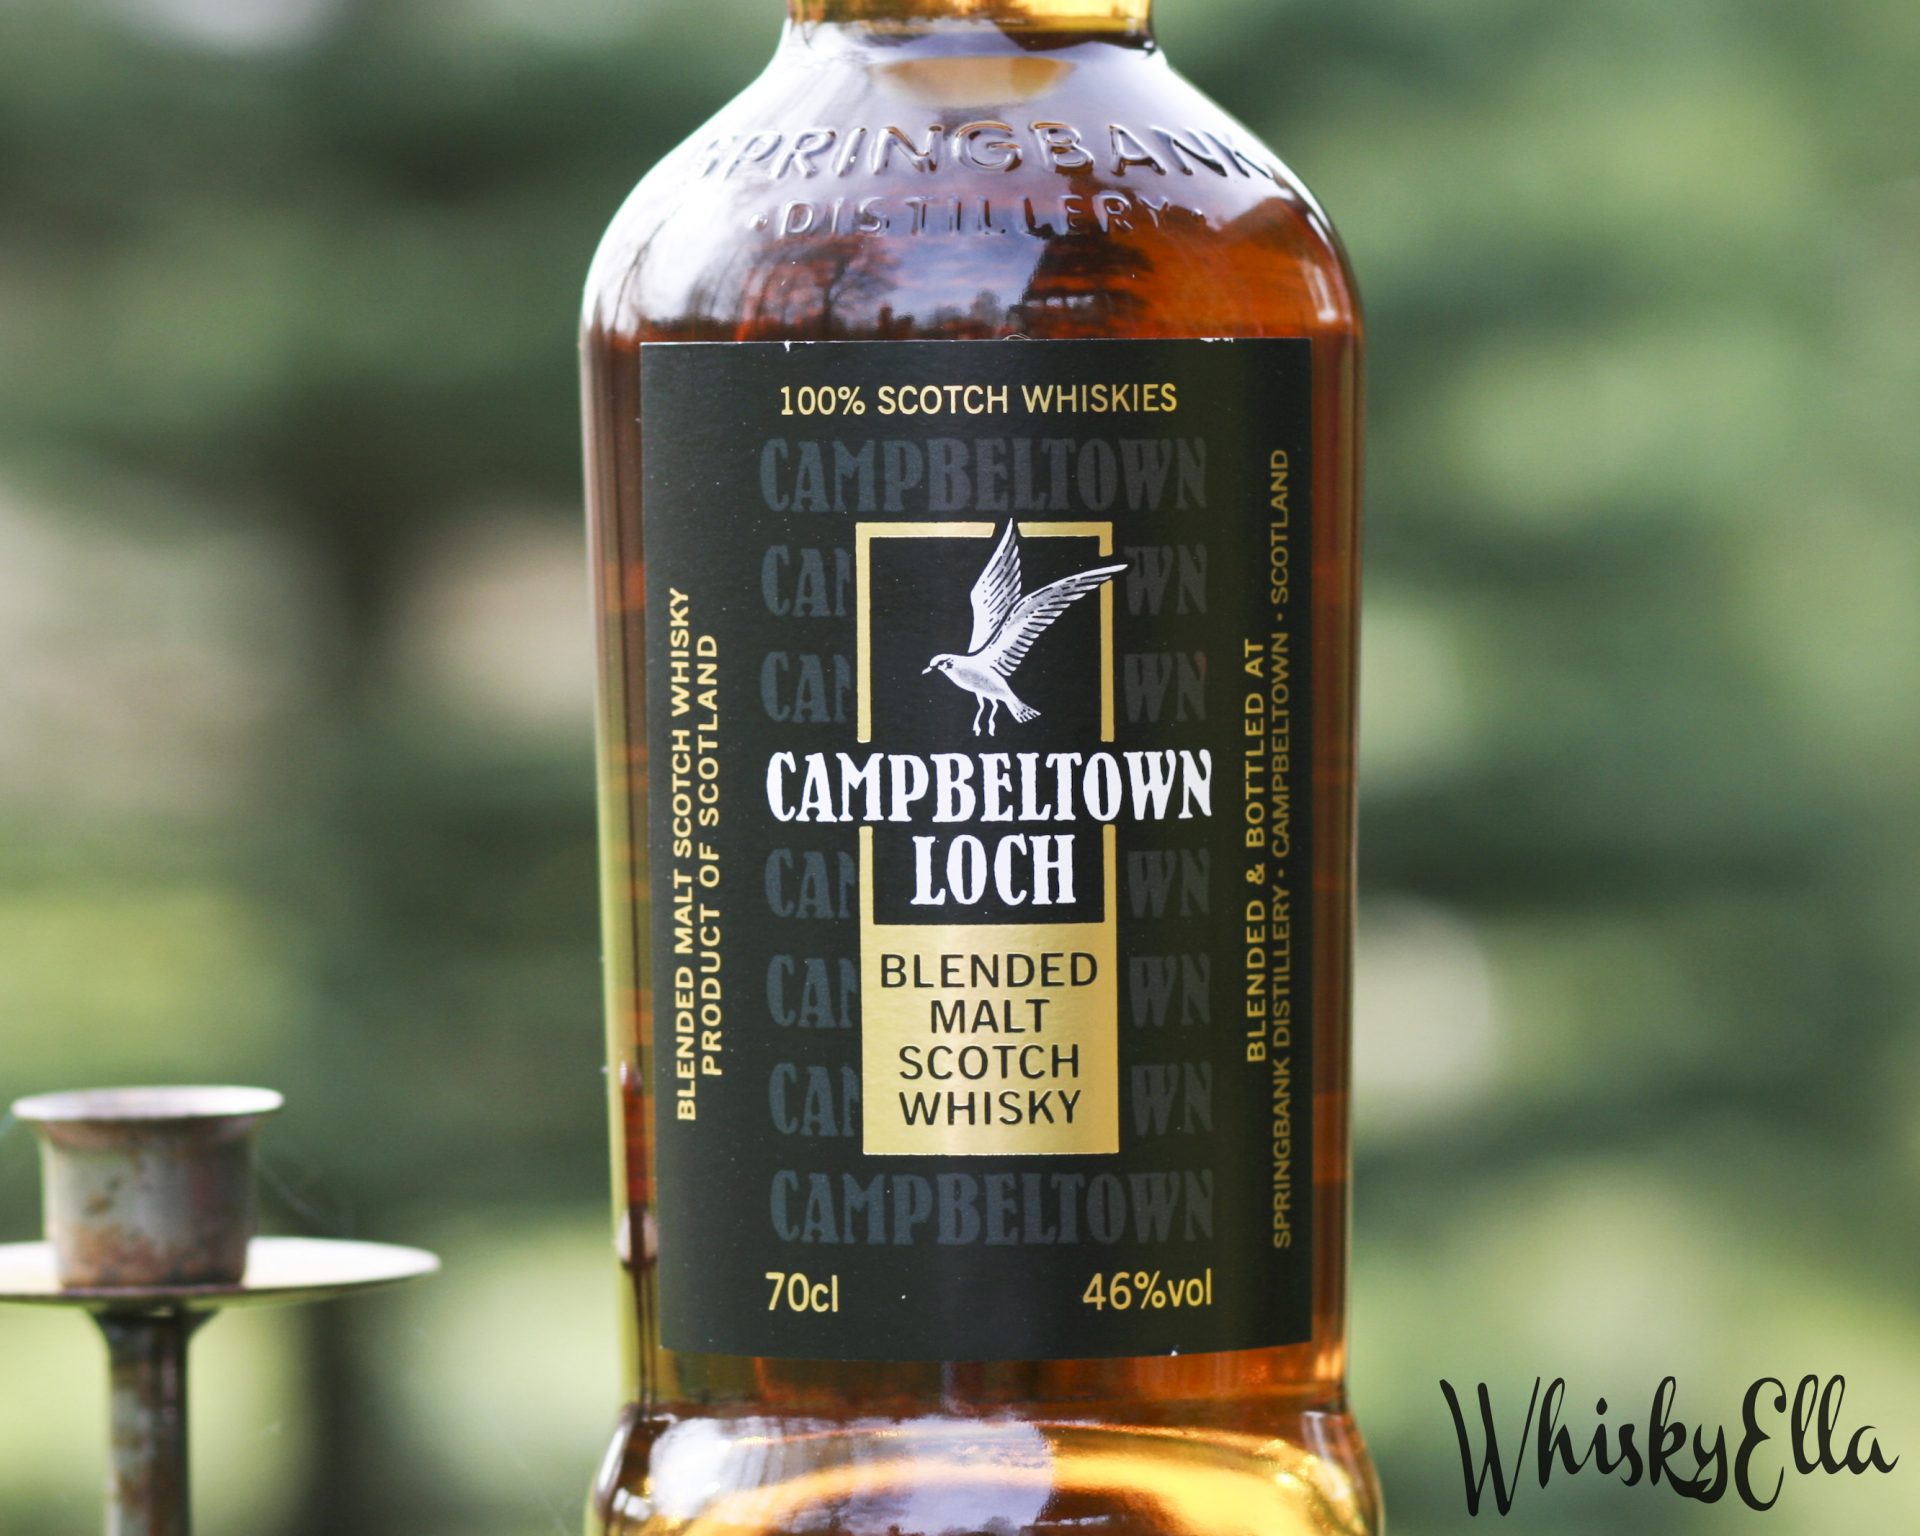 Nasza recenzja Campbeltown Loch Blended Malt Scotch Whisky #230